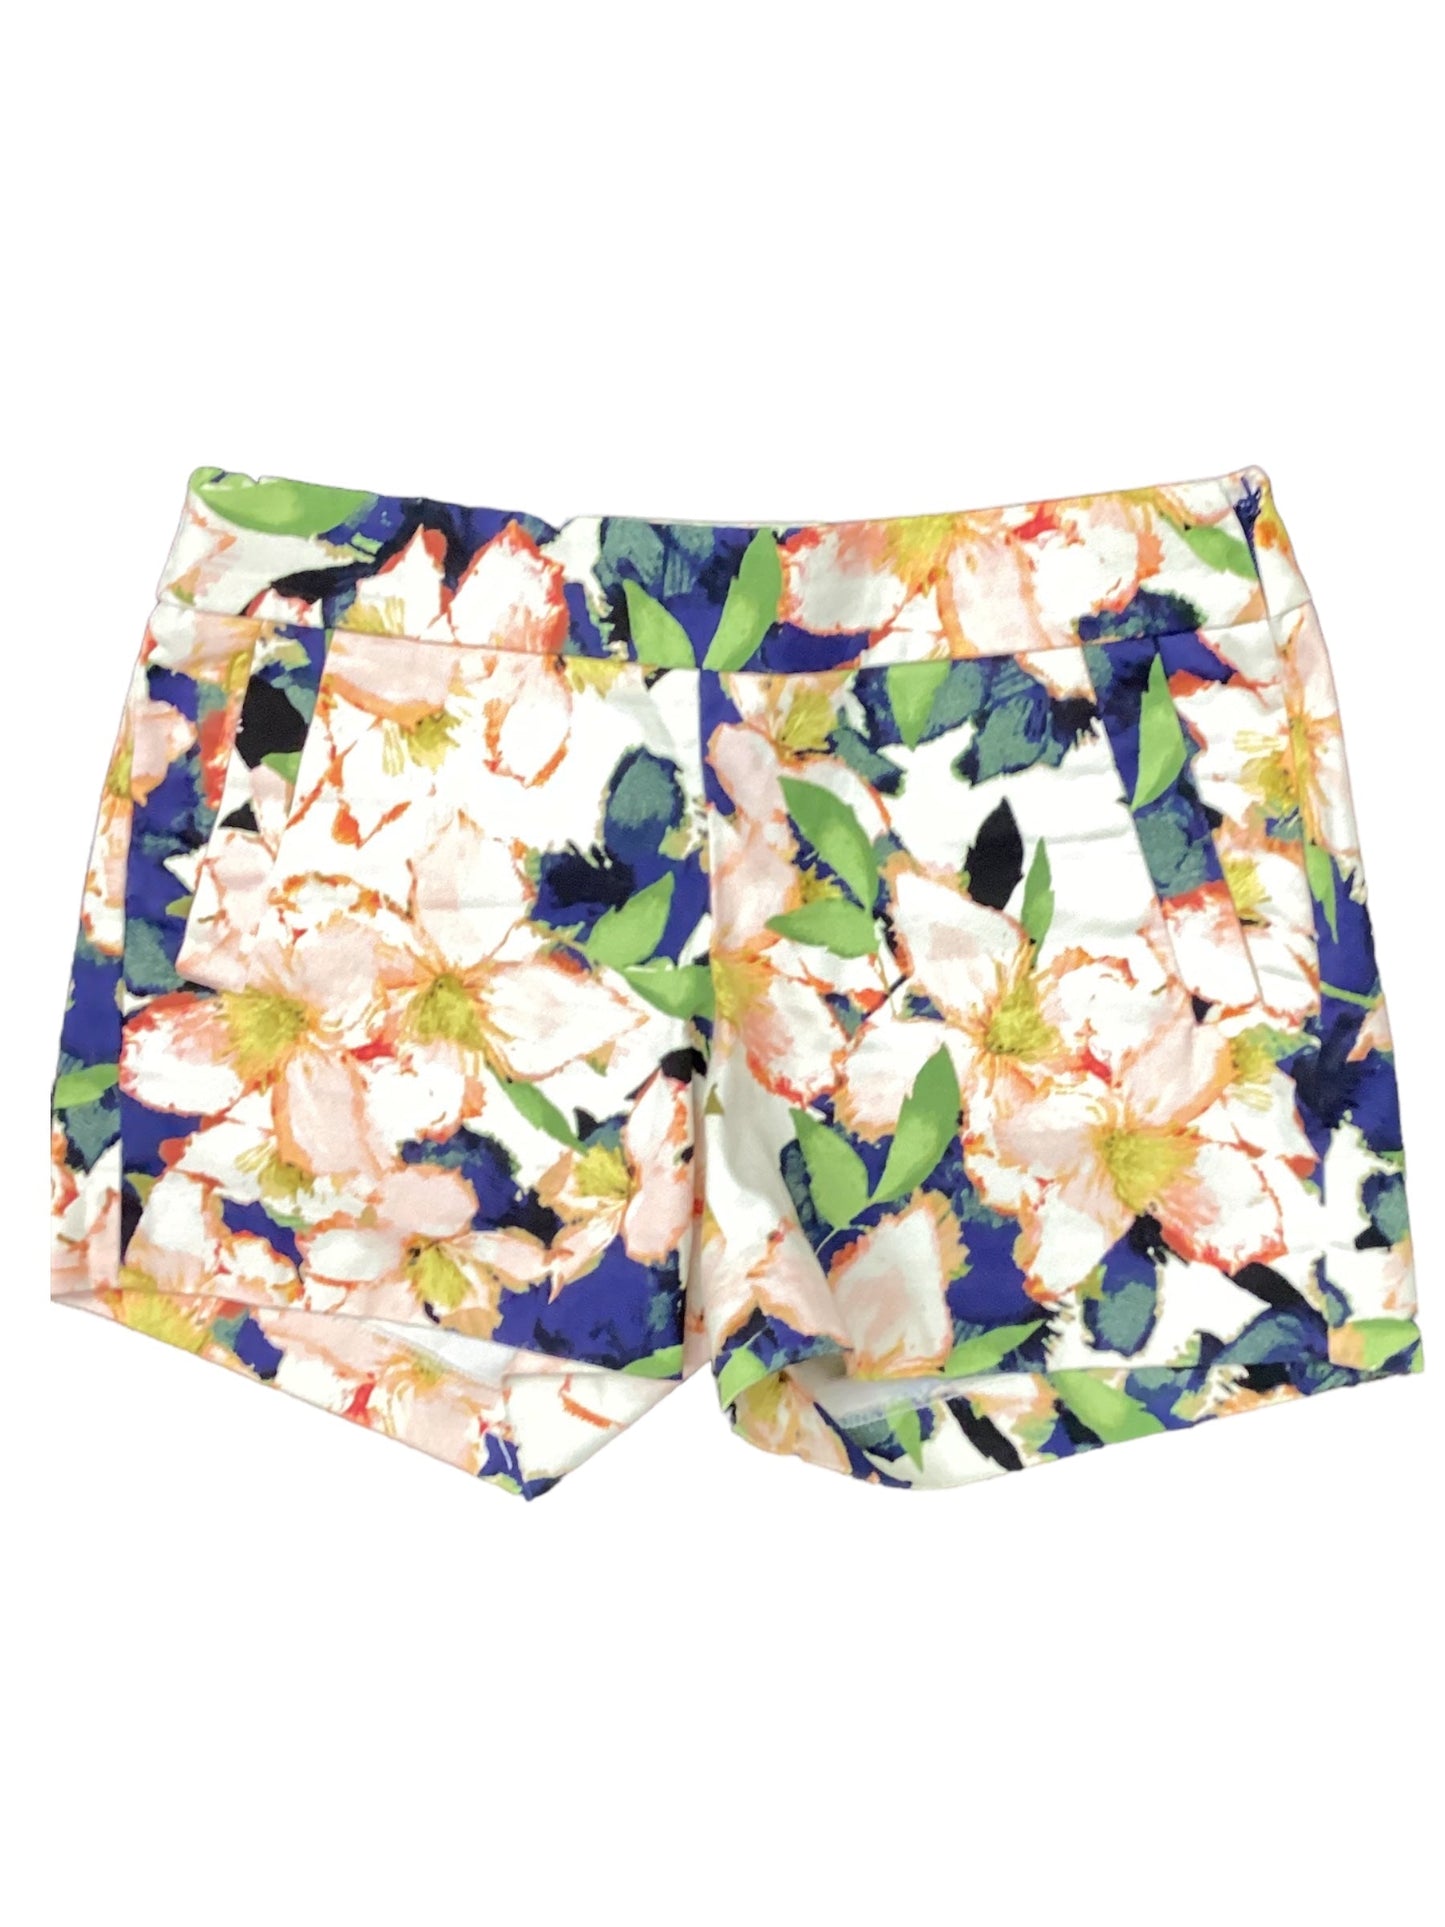 Floral Print Shorts J. Crew, Size 4